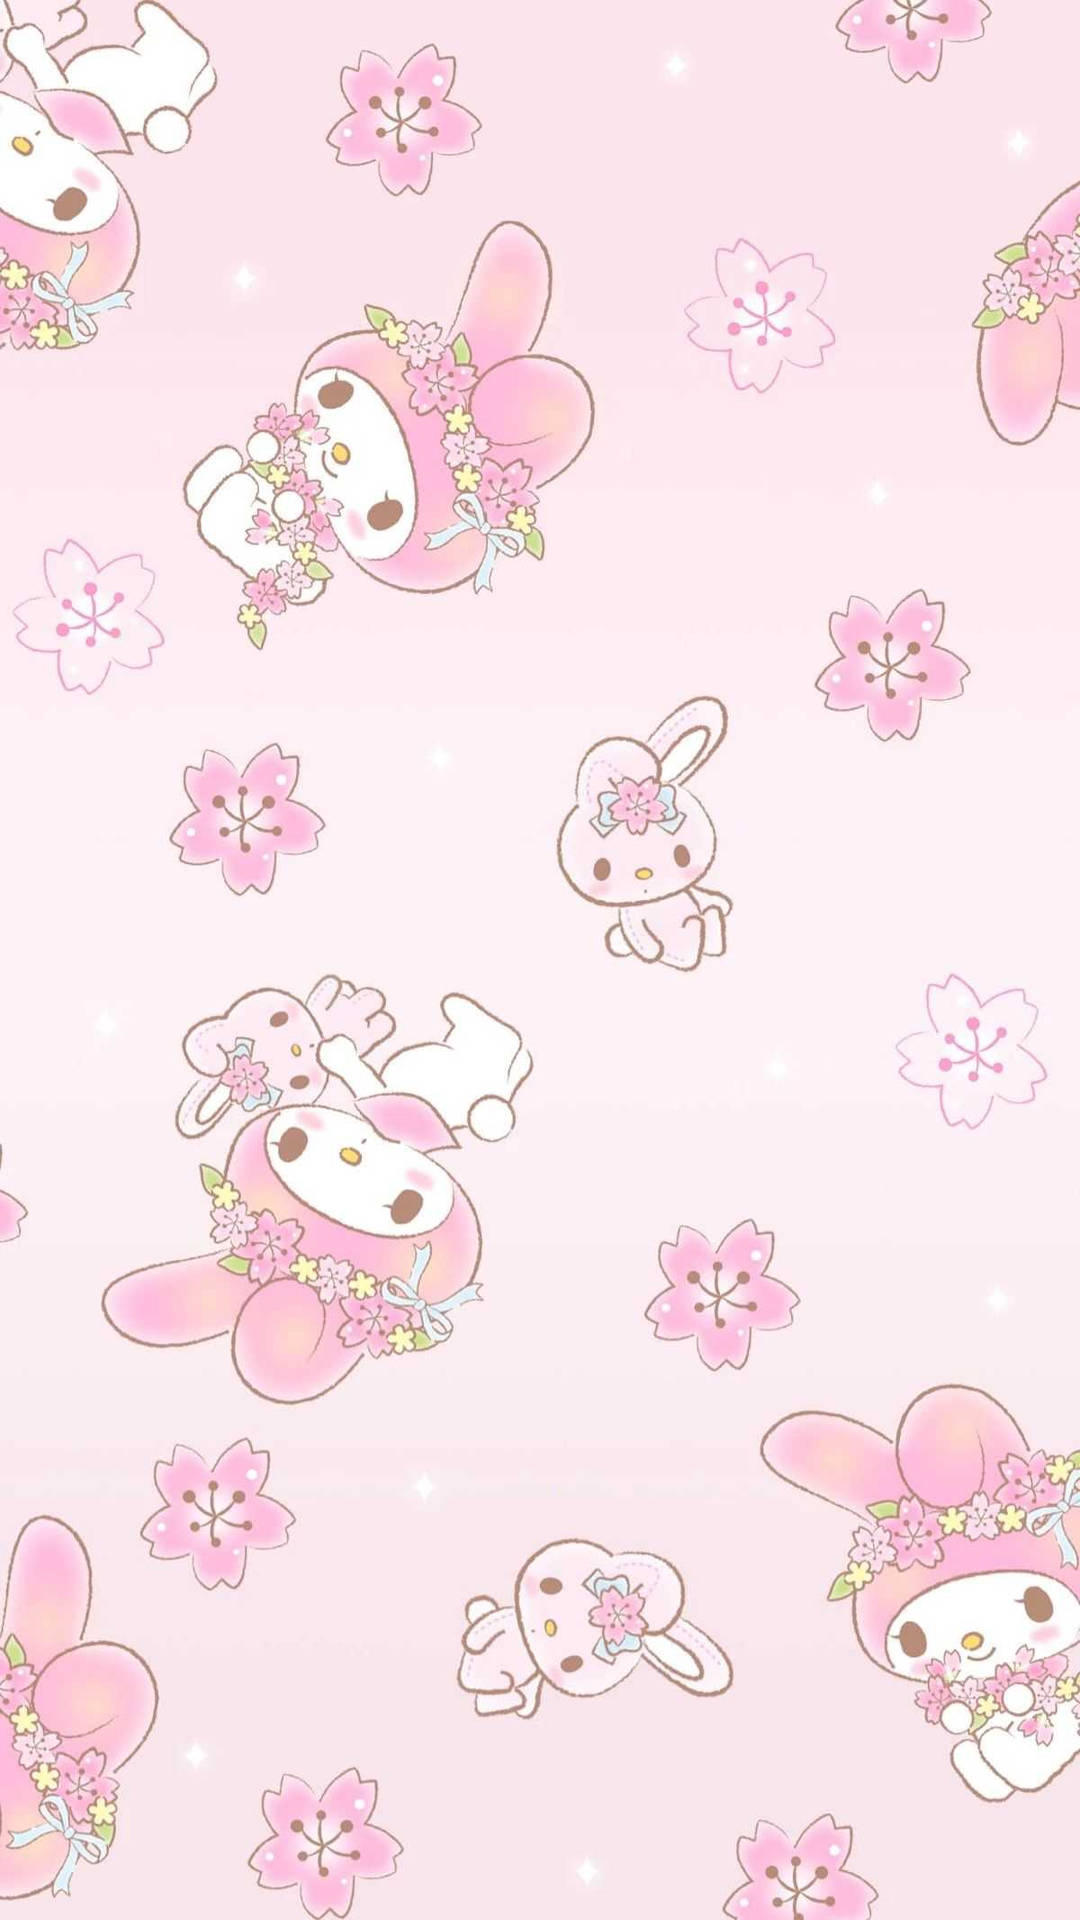 Free Cute Sanrio Wallpaper Downloads, Cute Sanrio Wallpaper for FREE